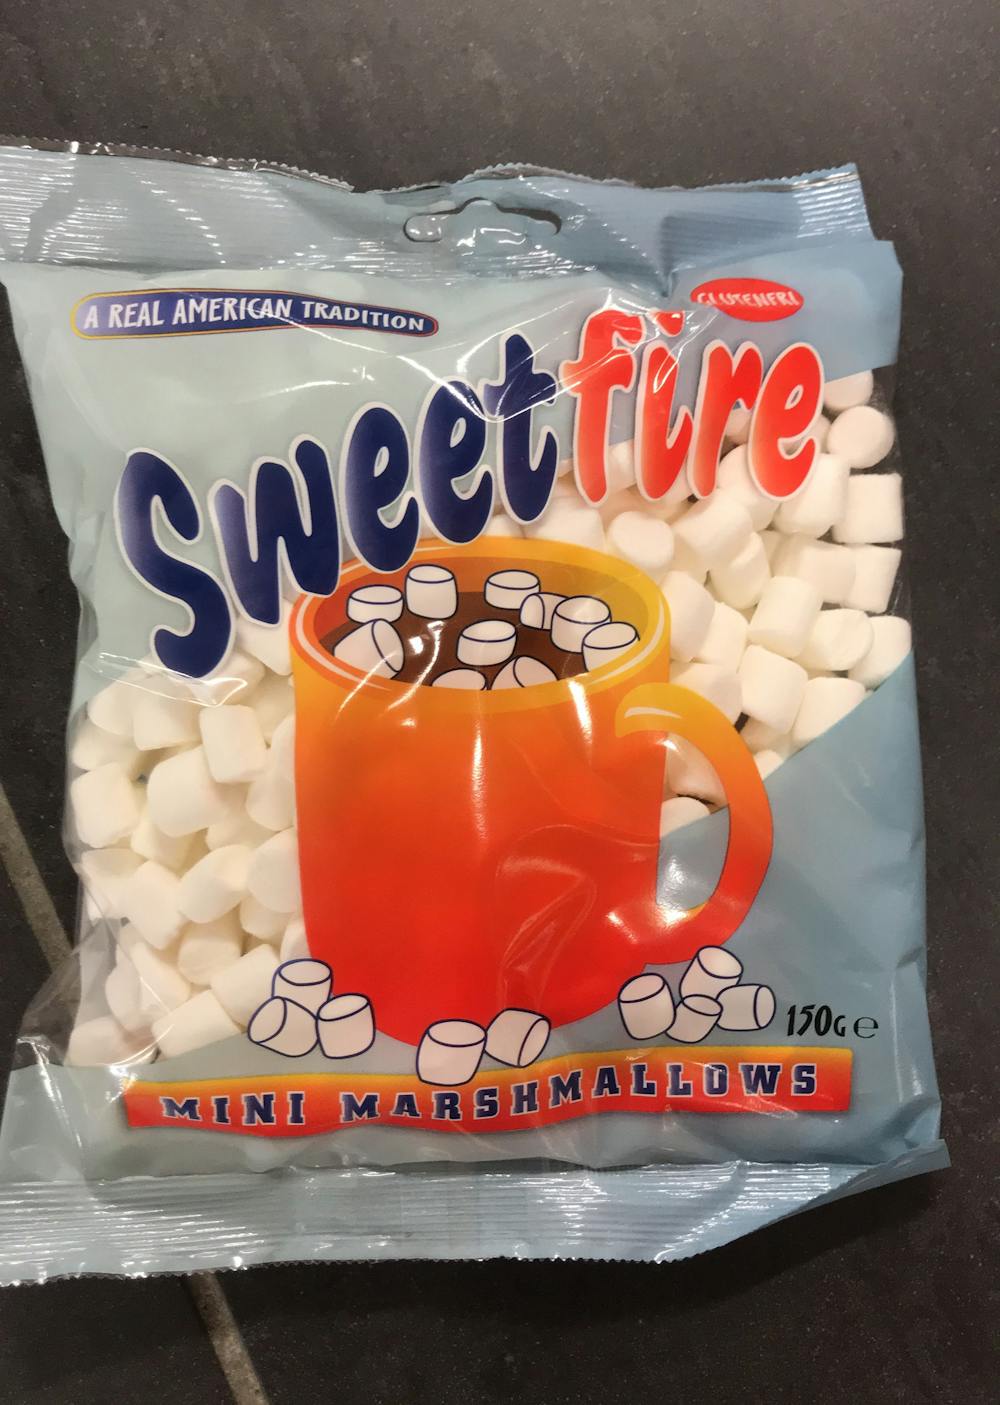 Mini marshmallows, Sweet Fire